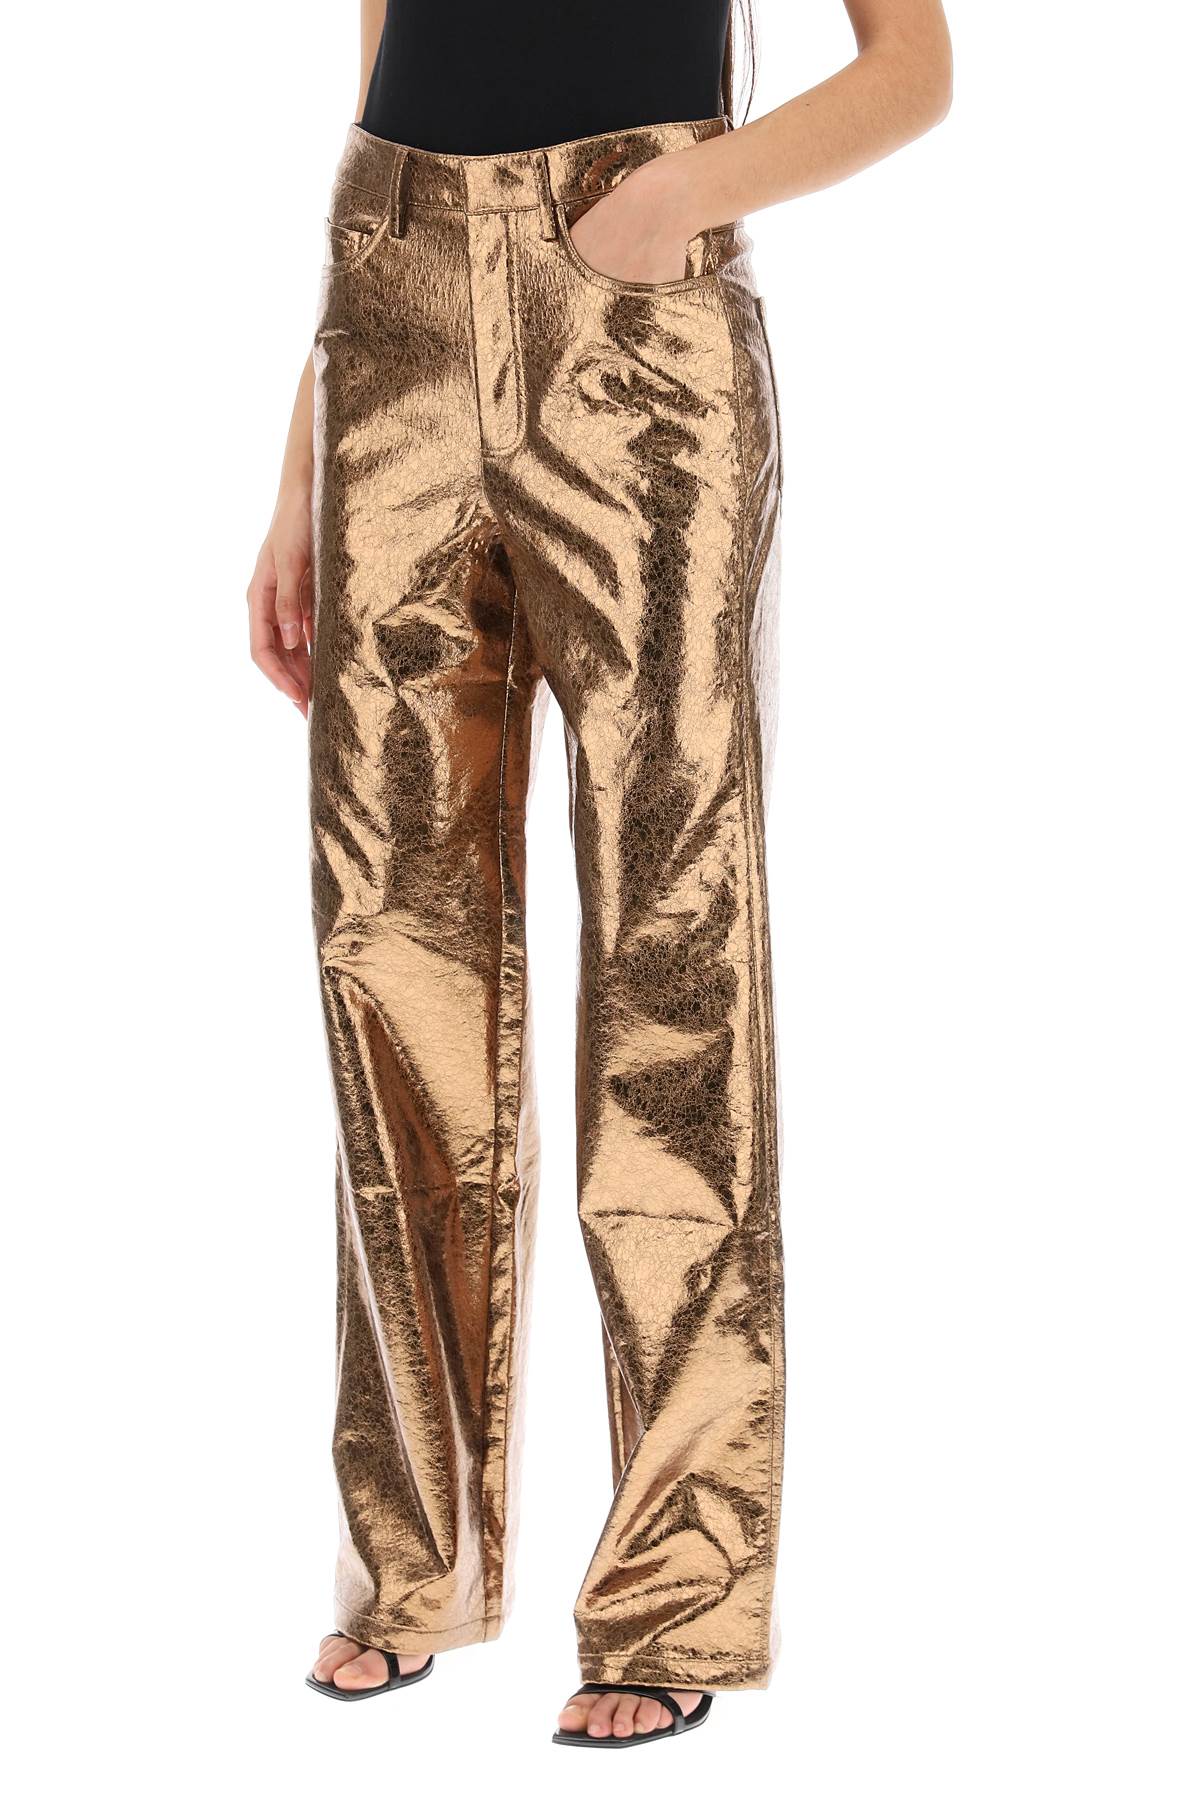 Rotate Textured Laminated Pants-Women's Fashion - Women's Clothing - Bottoms - Pants & Capris-Rotate-36-Metallic-Urbanheer